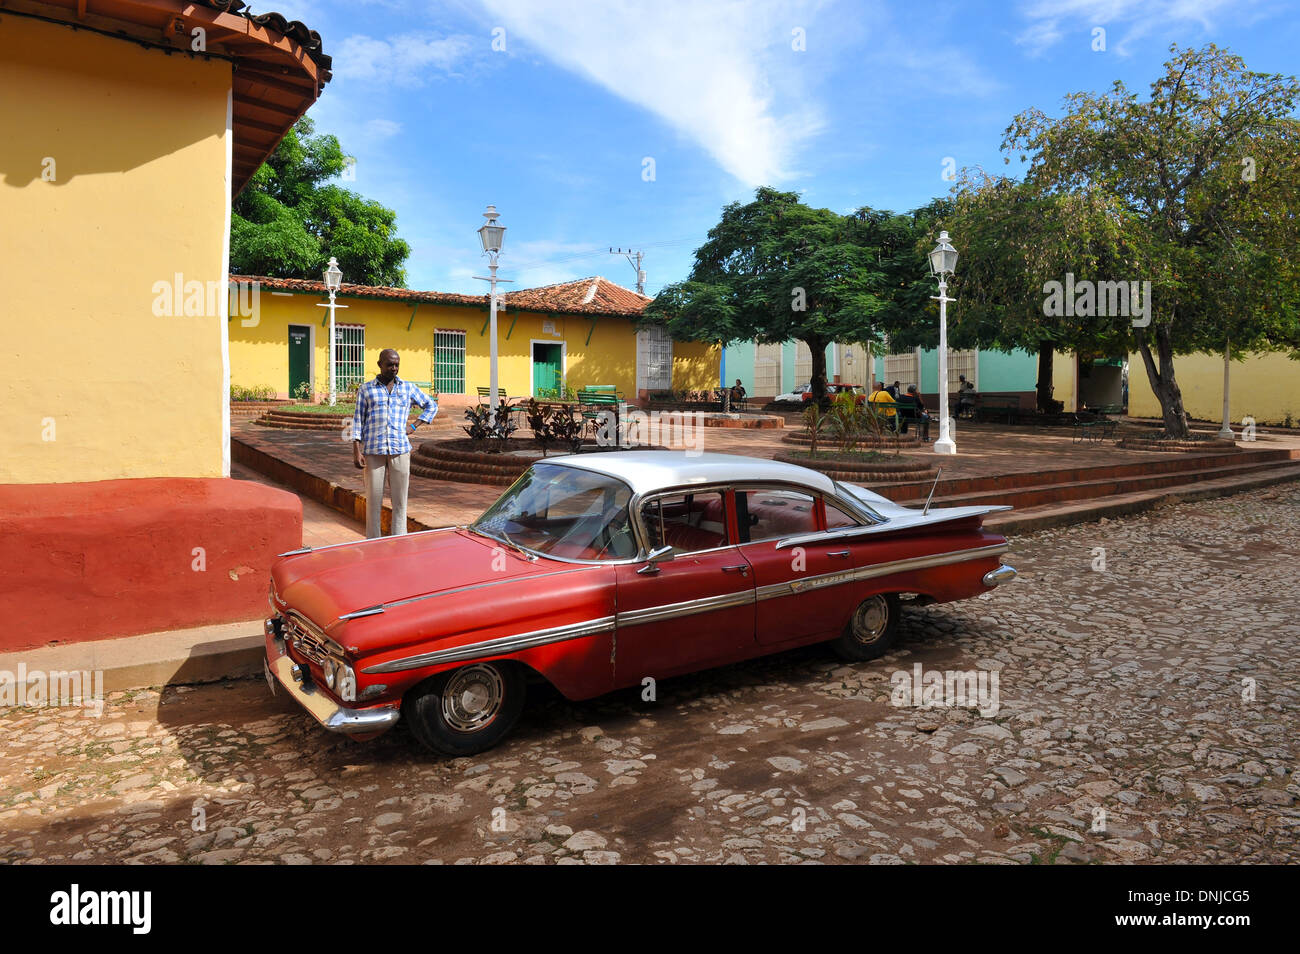 An old American car on the street of Trinidad, Cuba Stock Photo